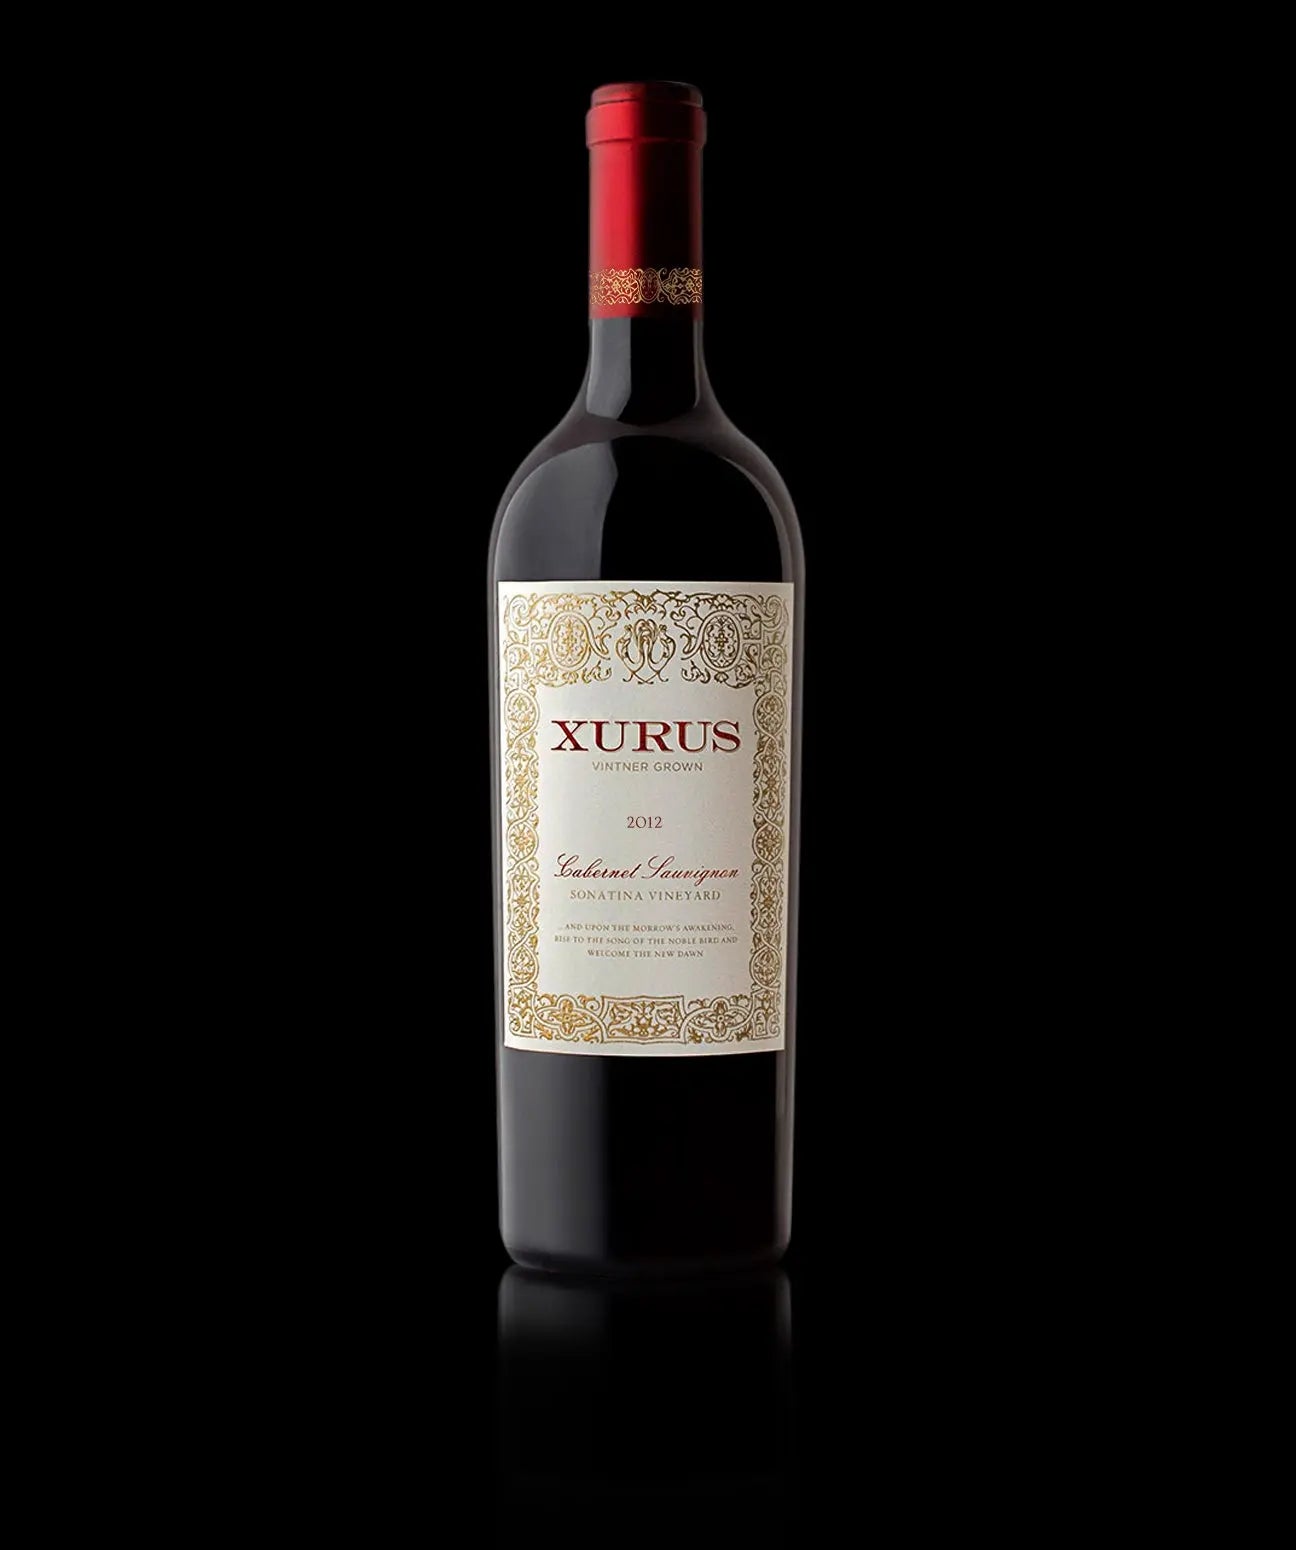 Image of a Xurus Cabernet Sauvignon 2012 bottle.